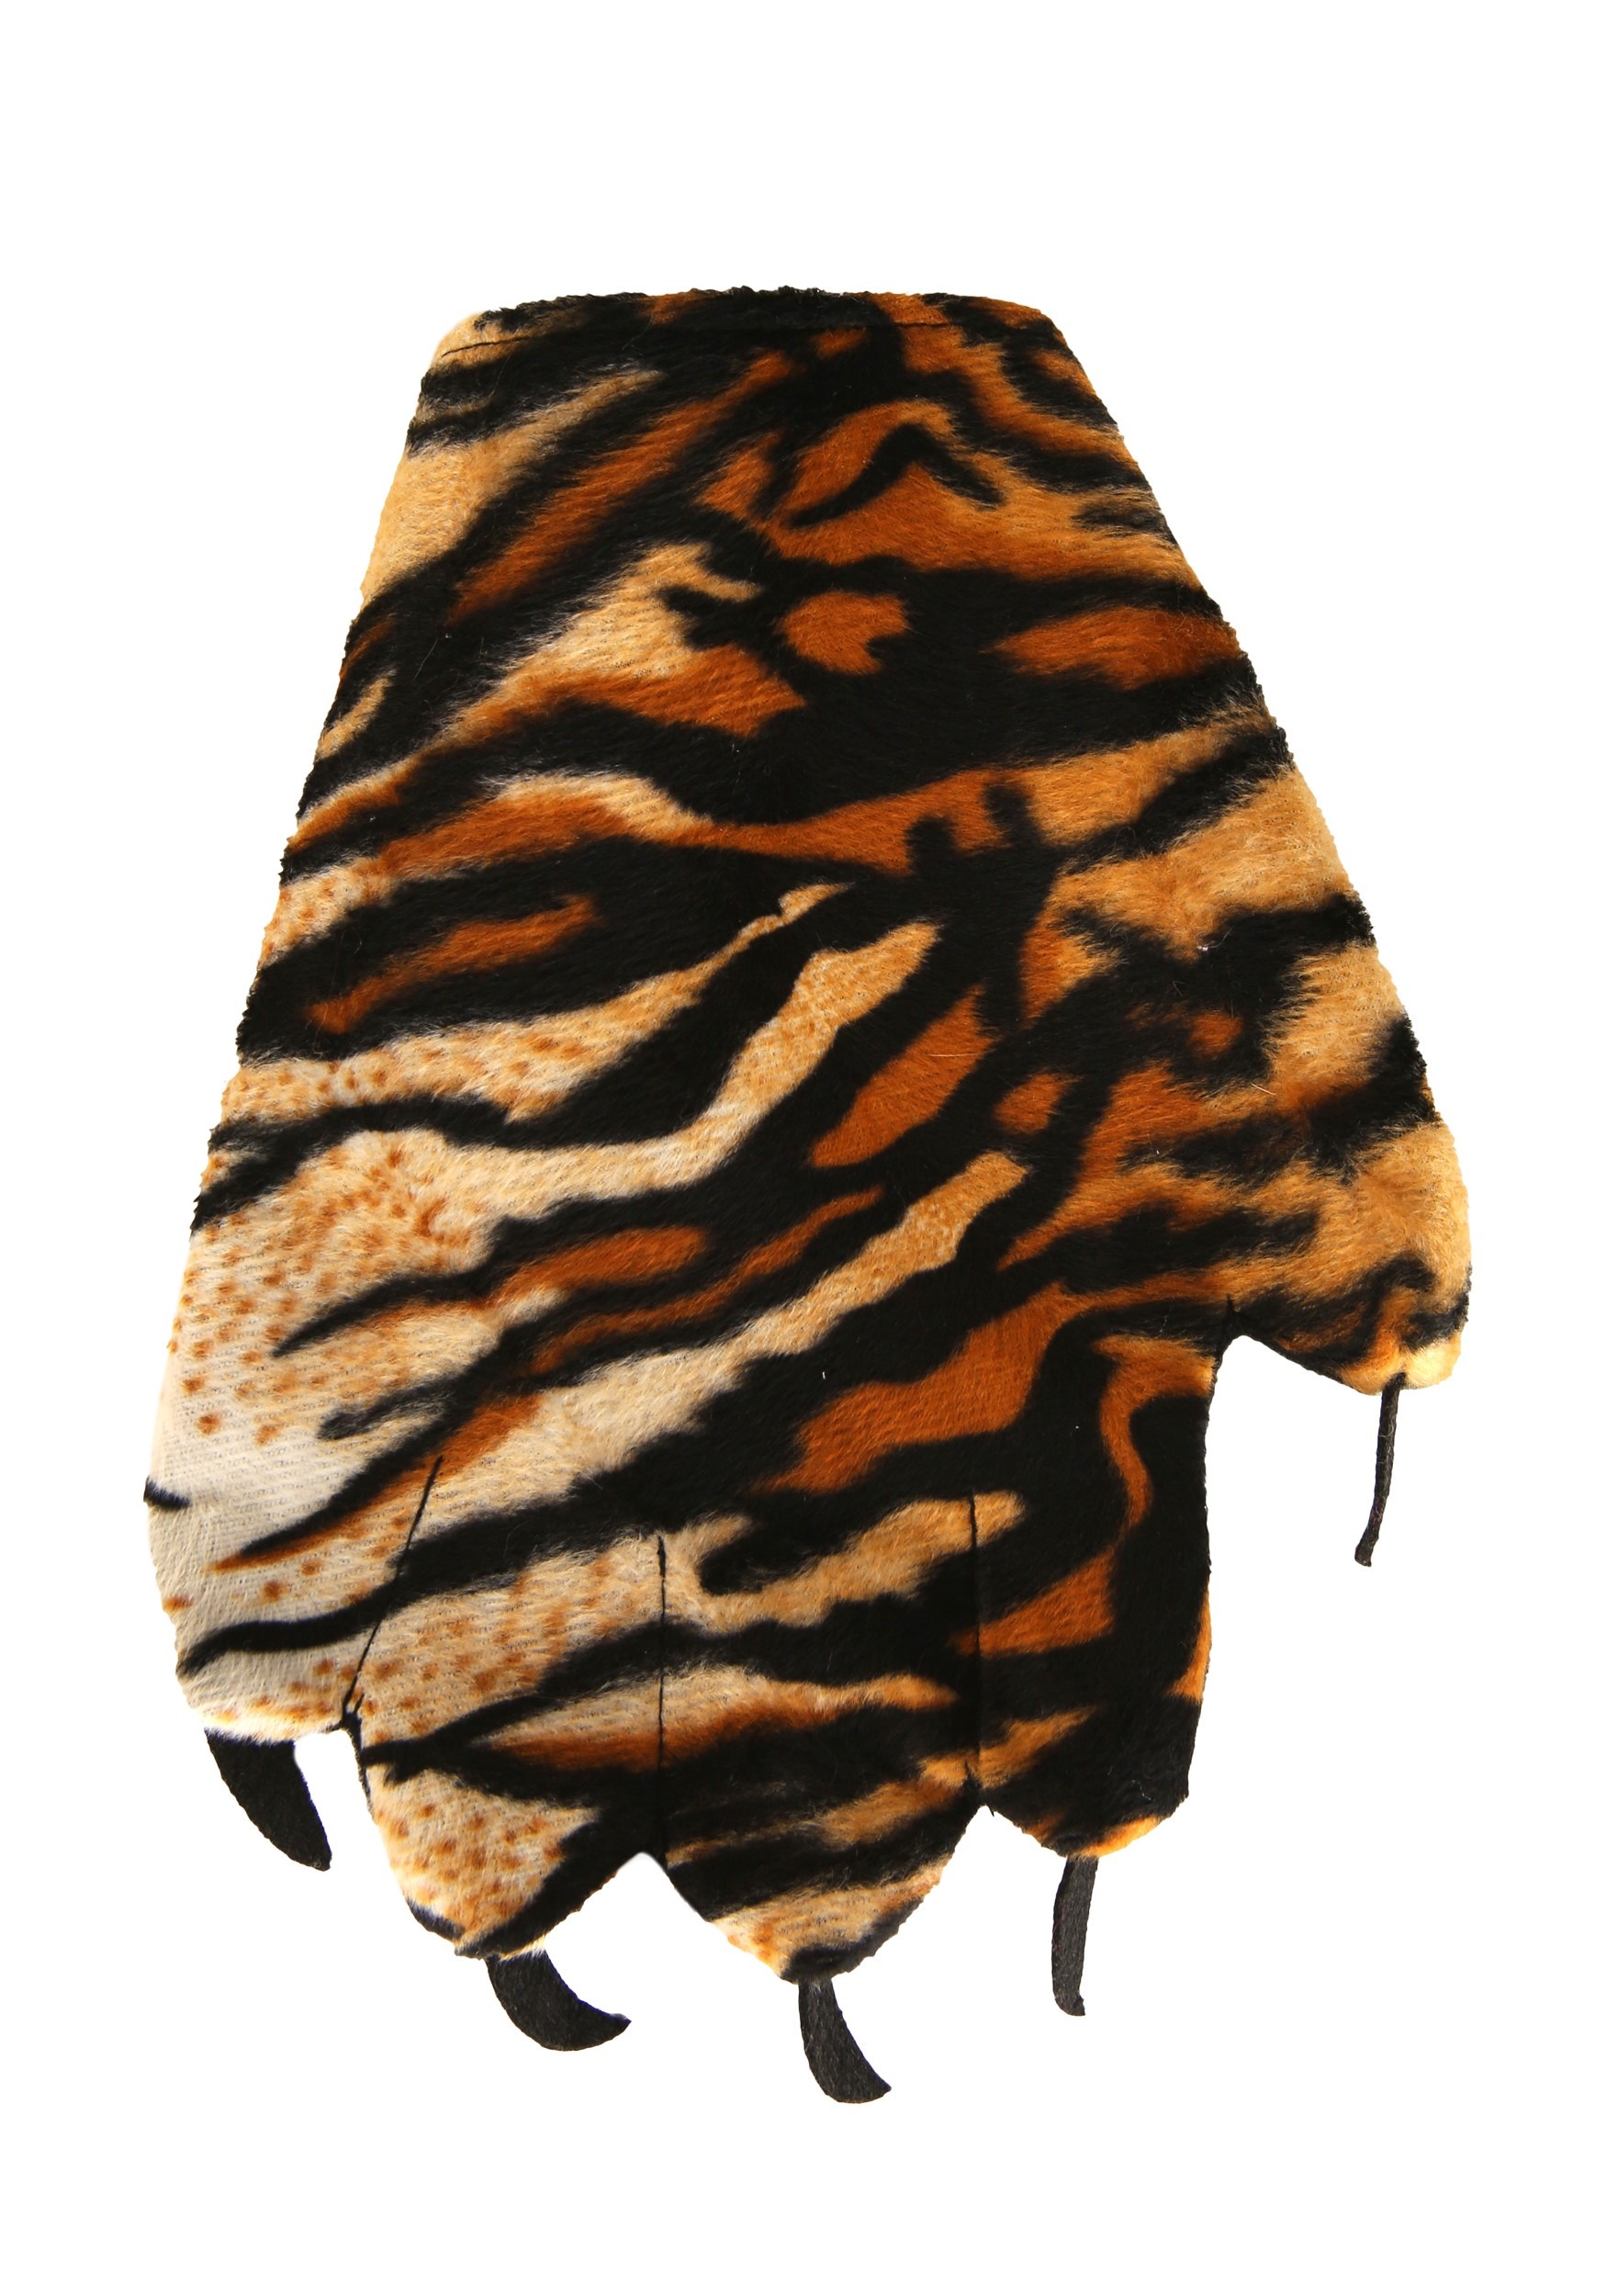 Costume Tiger Paw